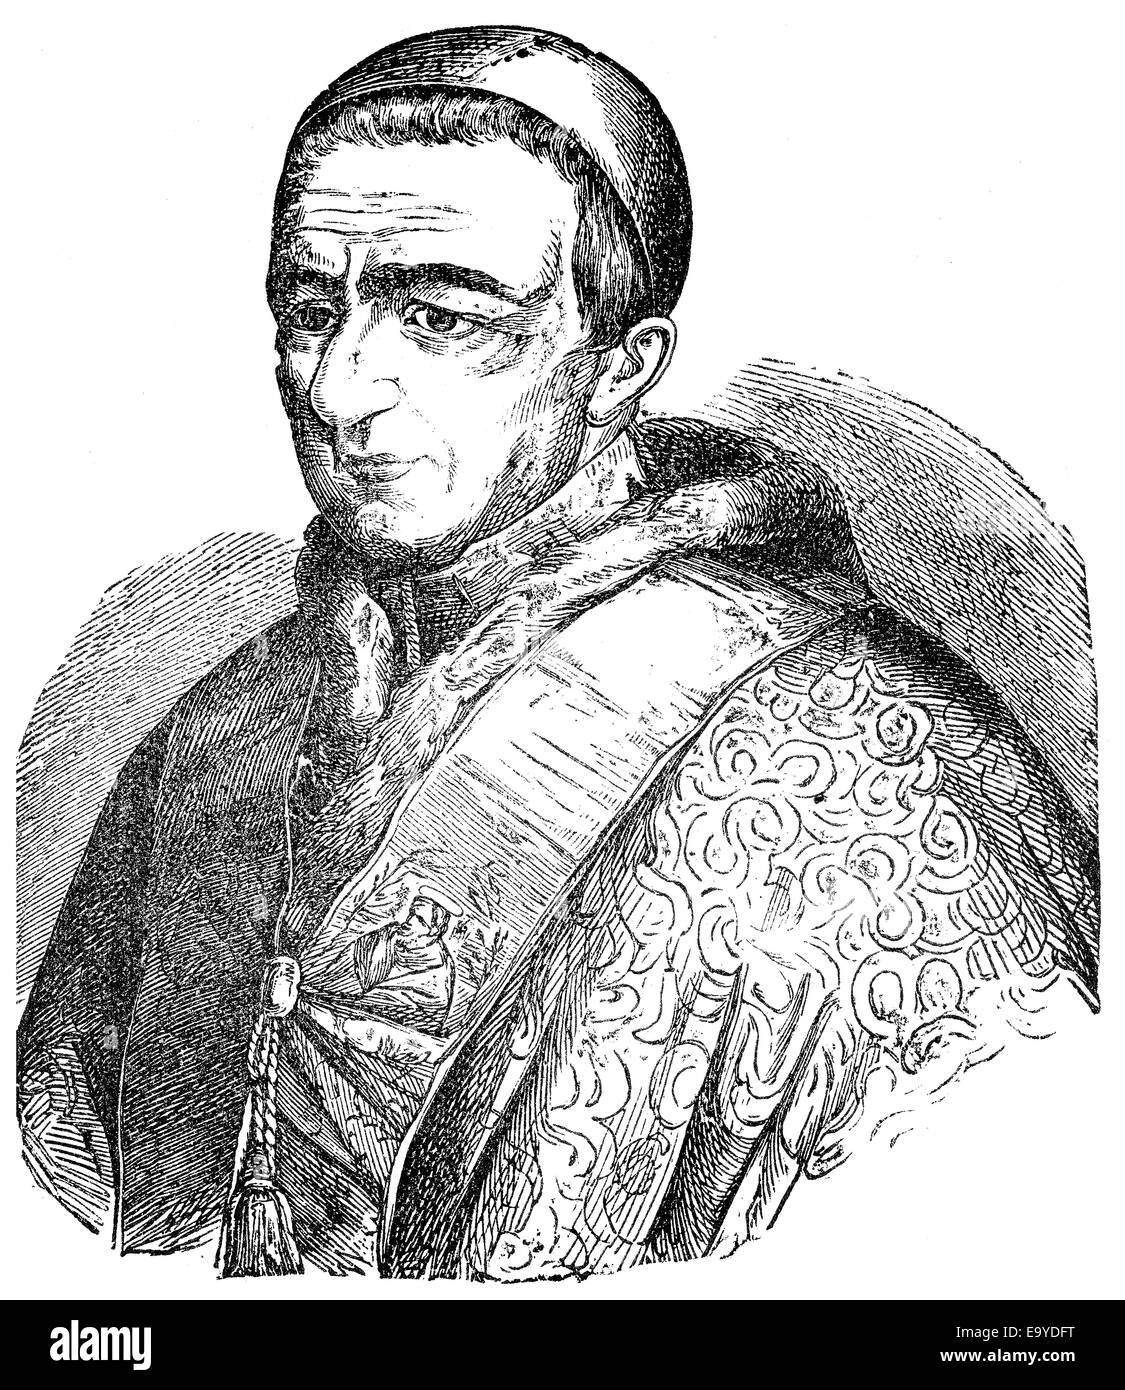 Papst Gregory XVI oder Gregorius XVI, 1765-1846, geb. Bartolomeo Alberto Cappellari EC, Papst von 1831 bis 1846, Papst Gregor XVI., Stockfoto